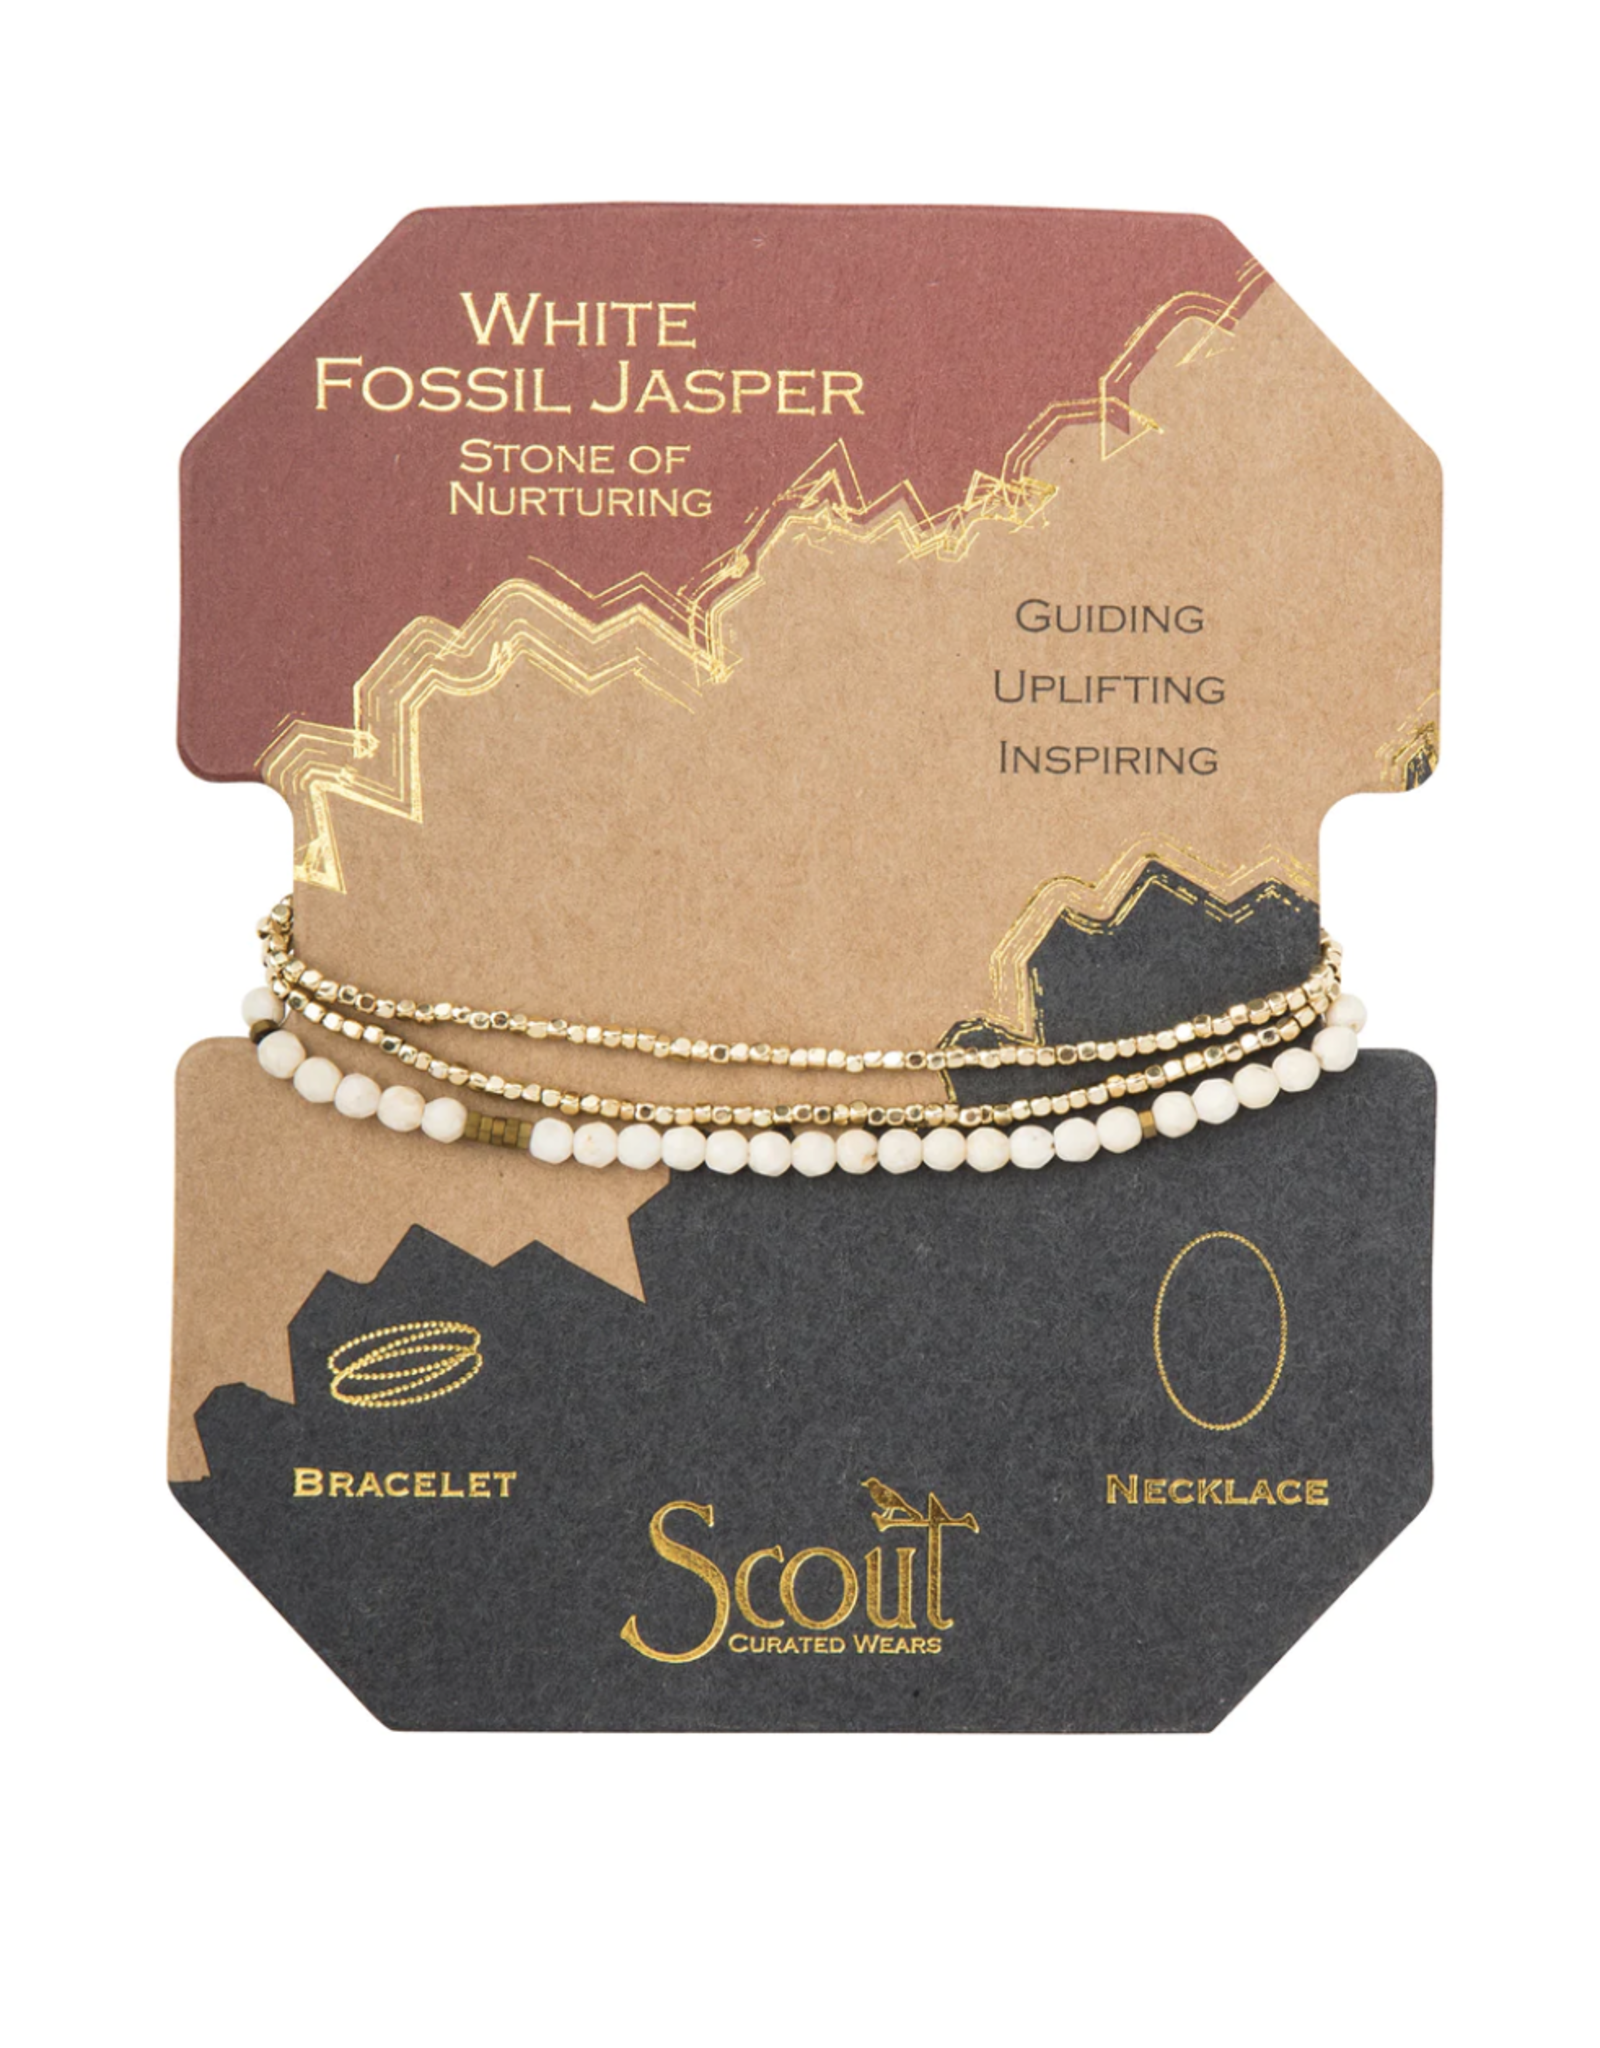 Scout Delicate Stone Bracelet/Necklace - White Fossil Jasper/Gold